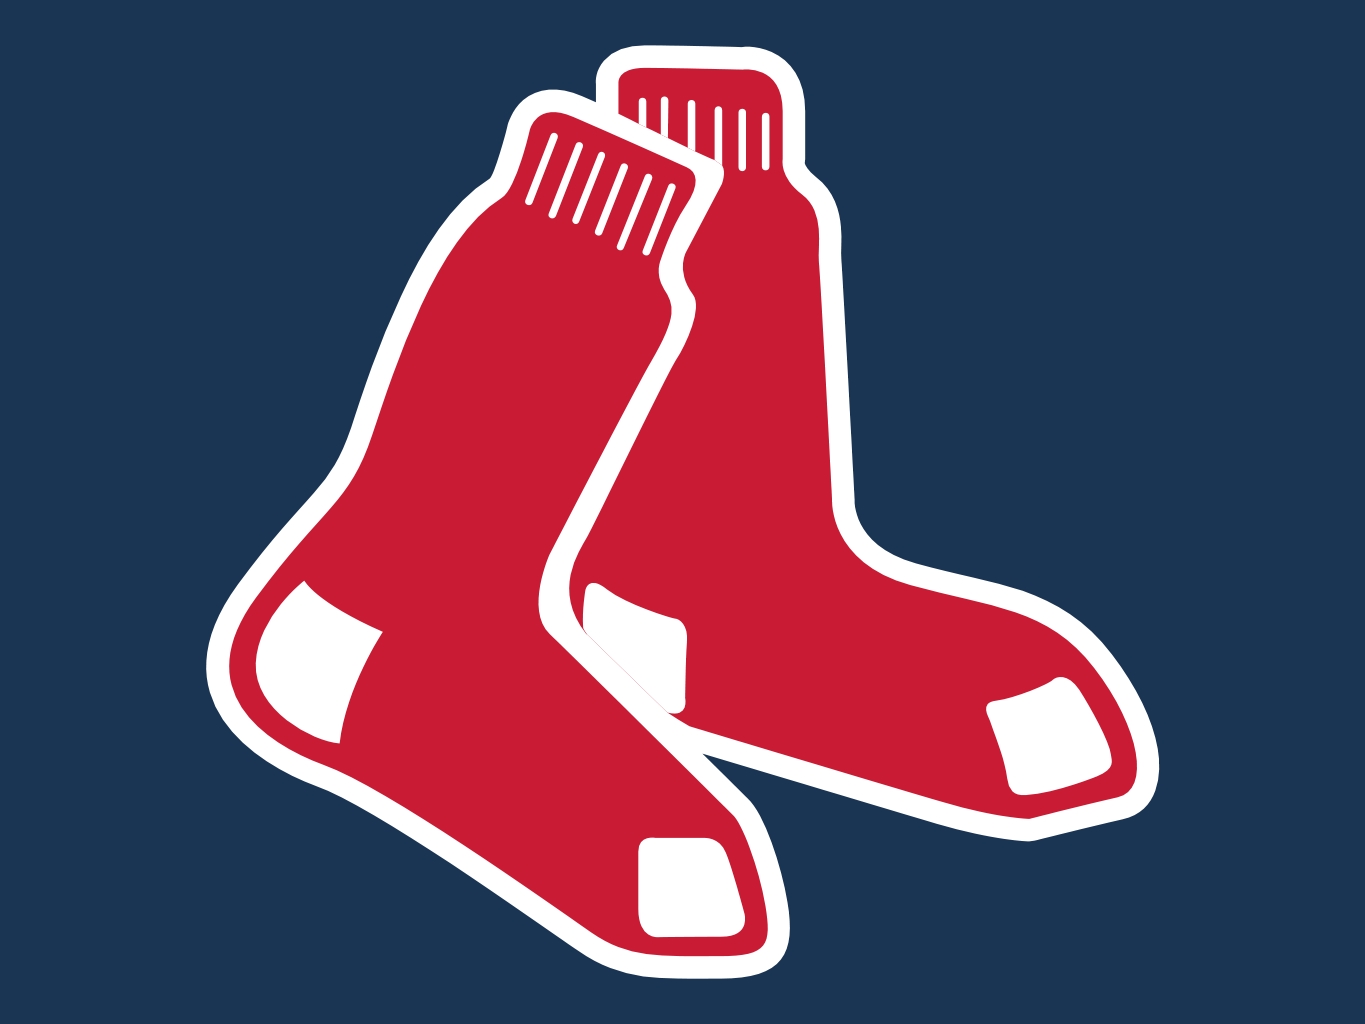 Red Sox Logo Jpg Free Download Clip Art Free Clip Art on. 